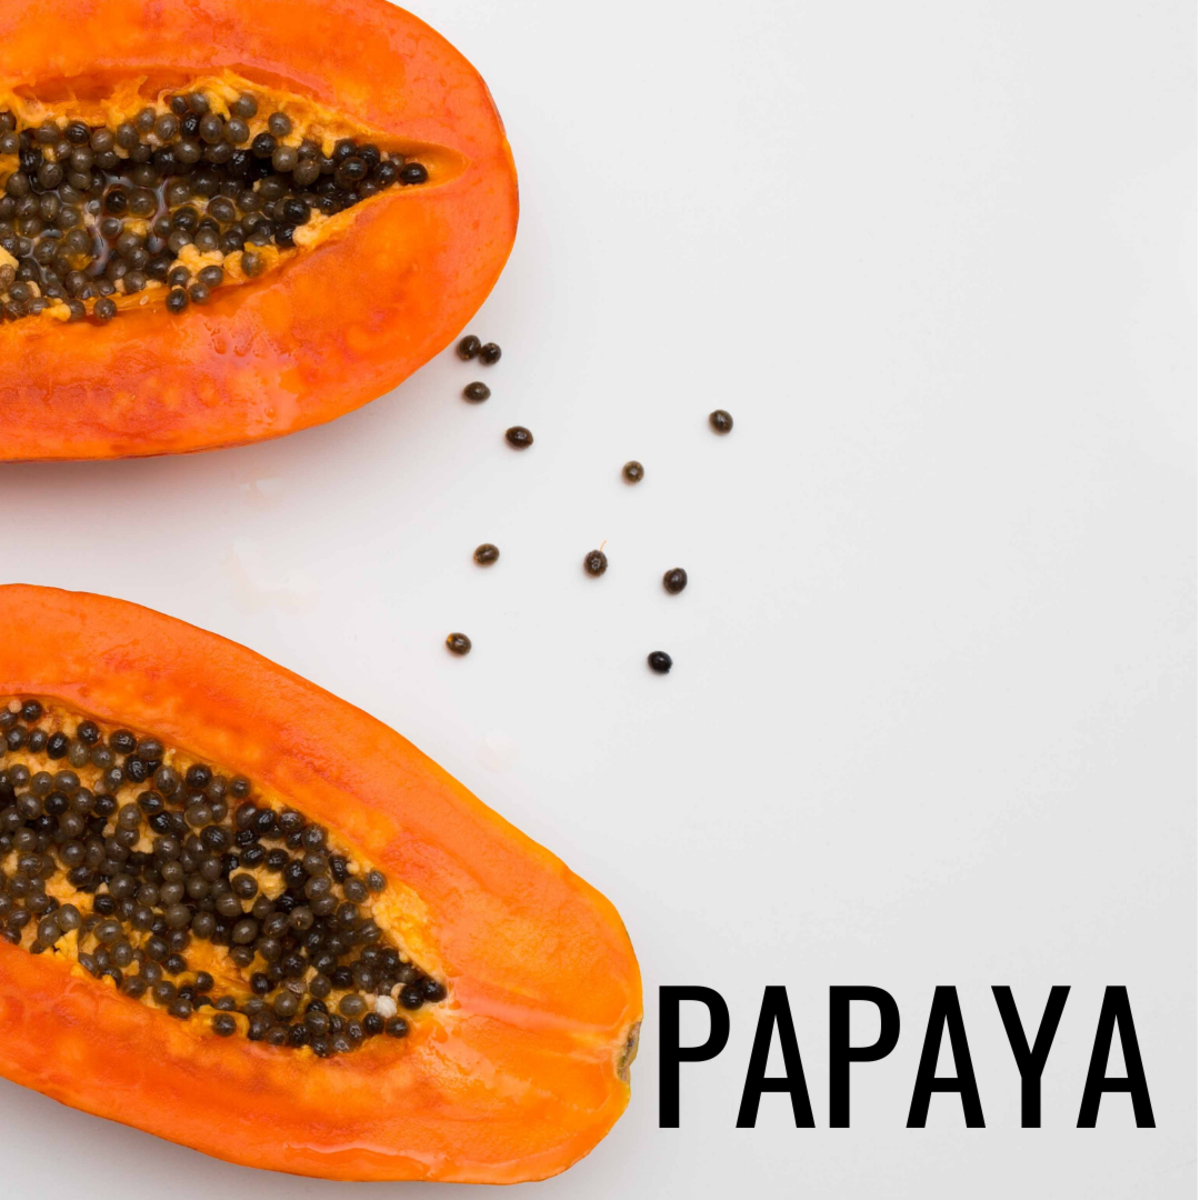 Papaya is a melasma super-food!